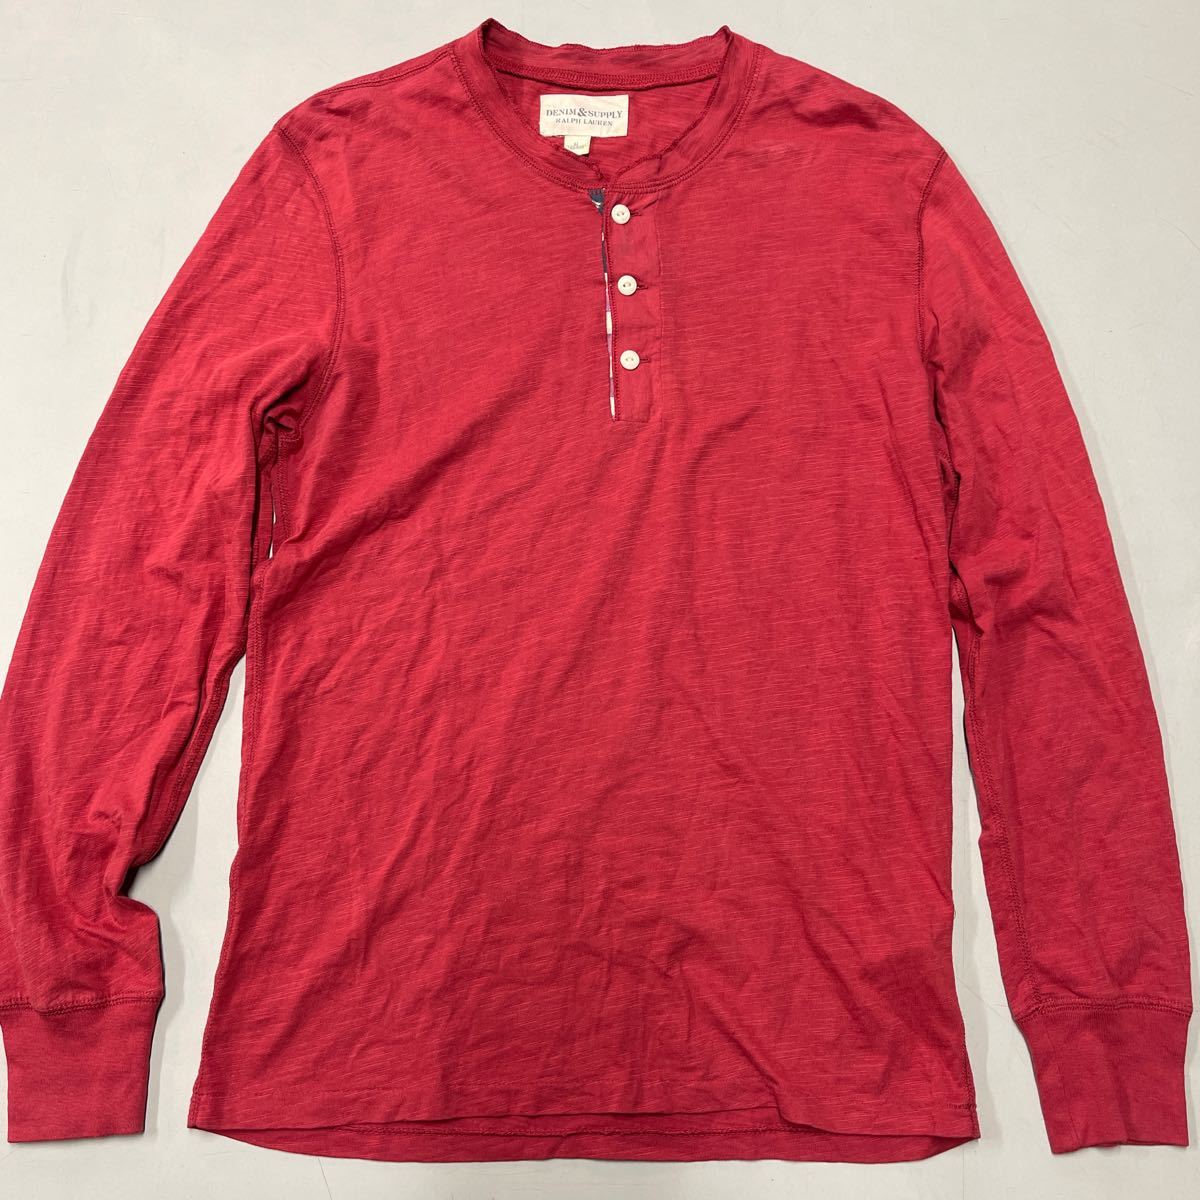 DENIM&SUPPLY RALPH LAUREN デニムアンドサプライ ラルフローレン コットンシャツ Mサイズ 赤 レッド ヘンリーネック 長袖 Tシャツ ボタン_画像1